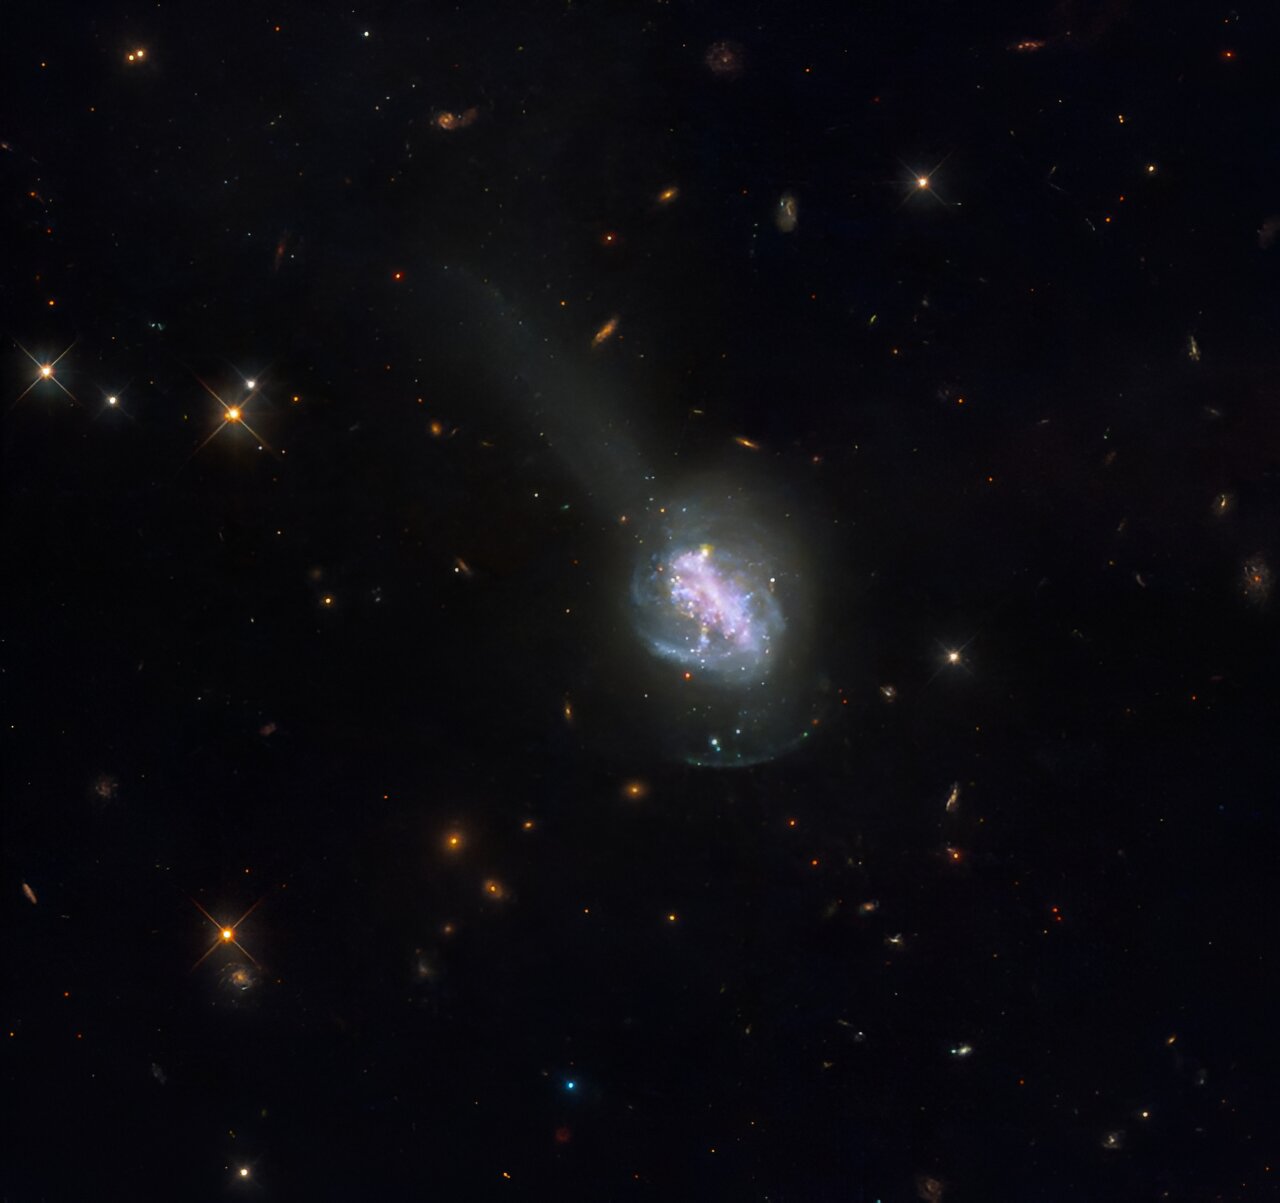 Hubble Observes ESO 185-IG013